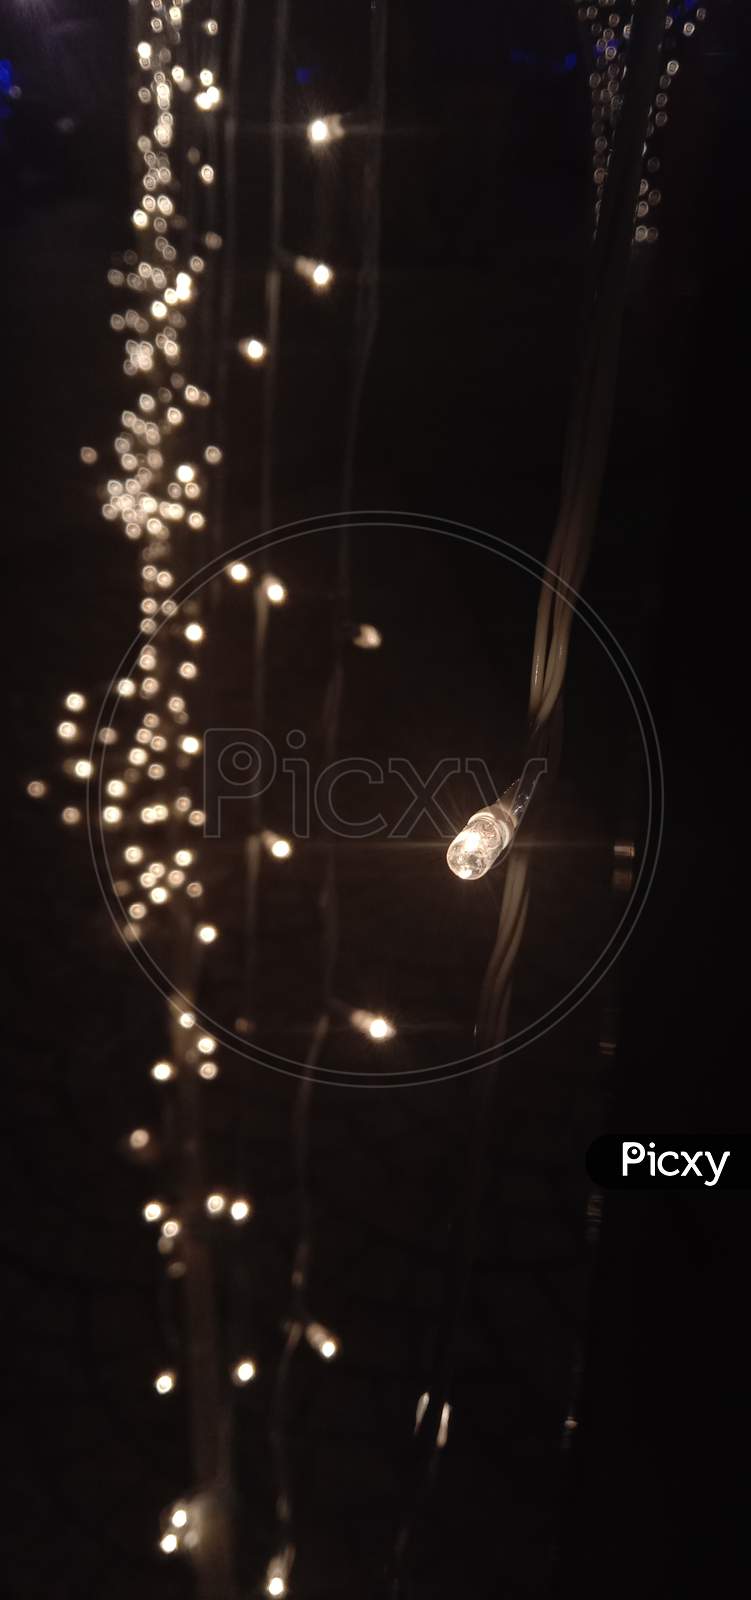 LED decorative serial bulbs glowing at night